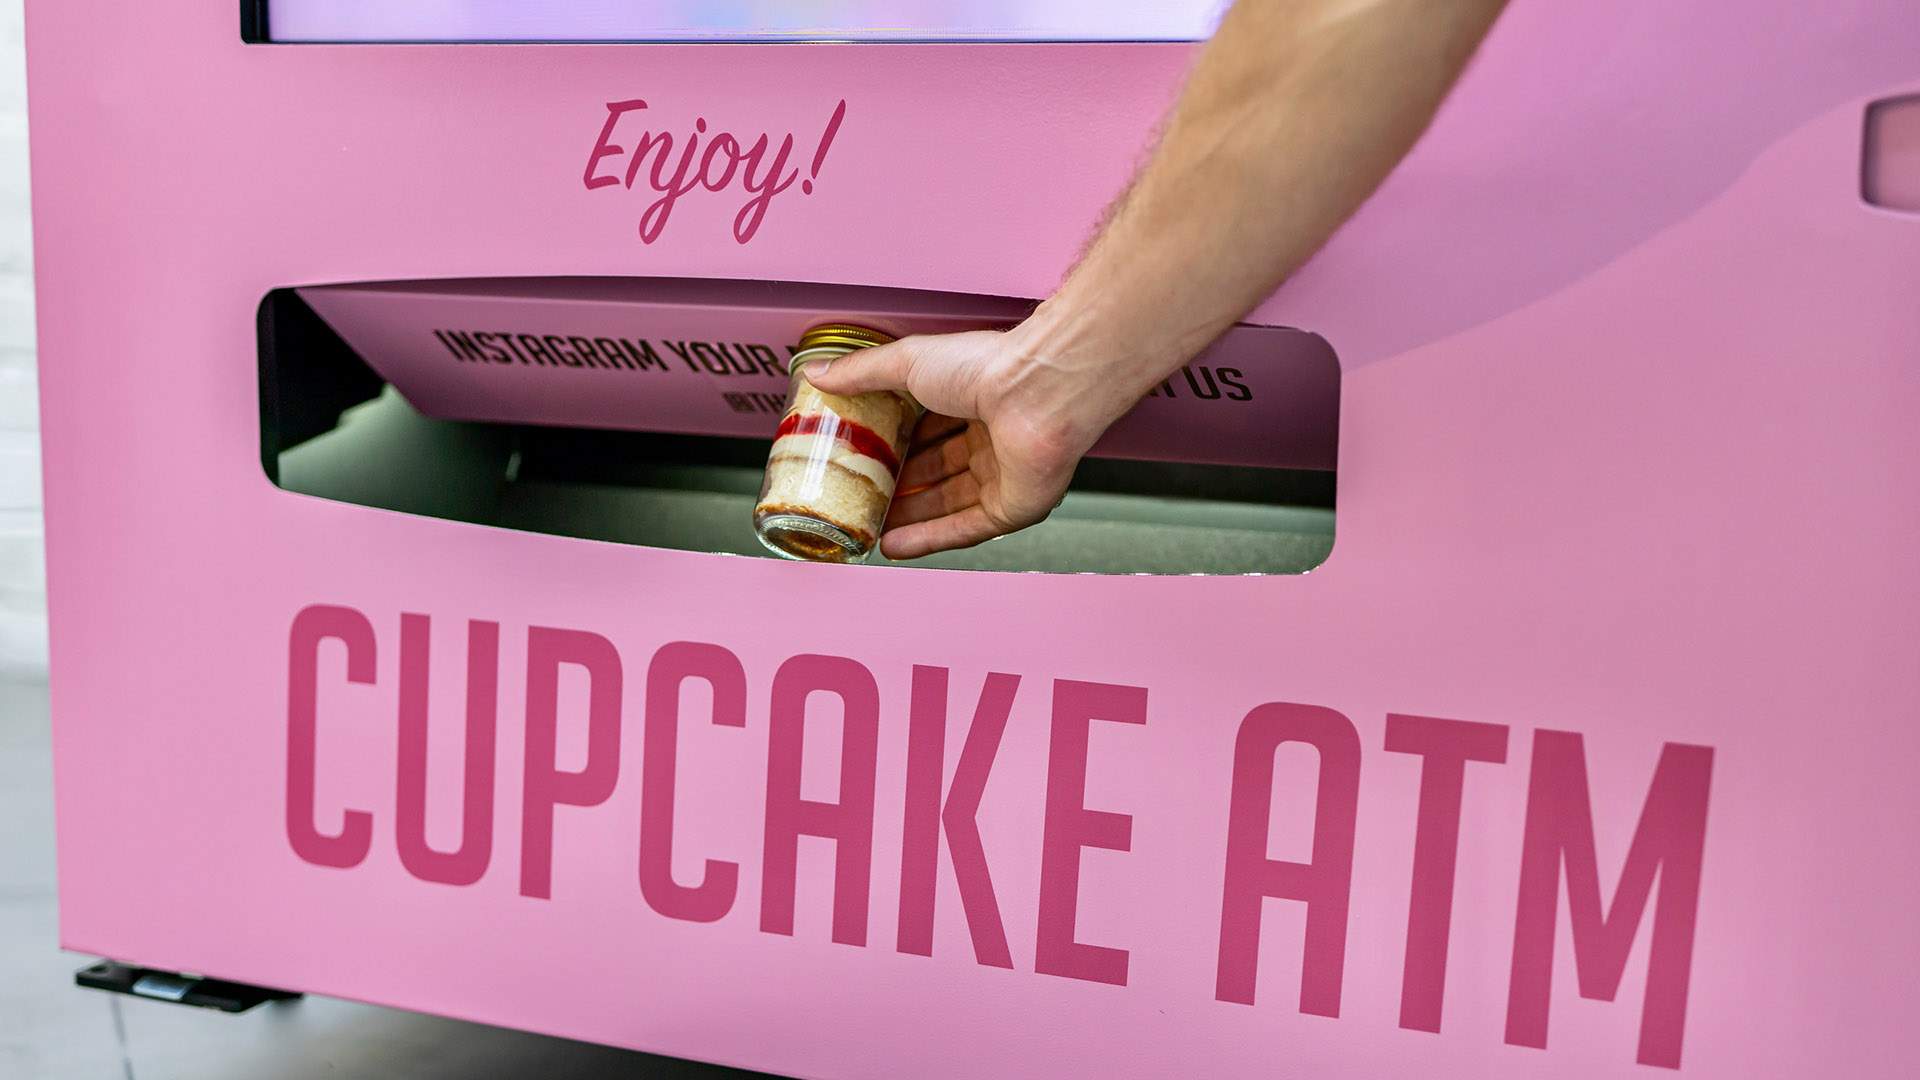 The Mason Baker's Cupcake ATM